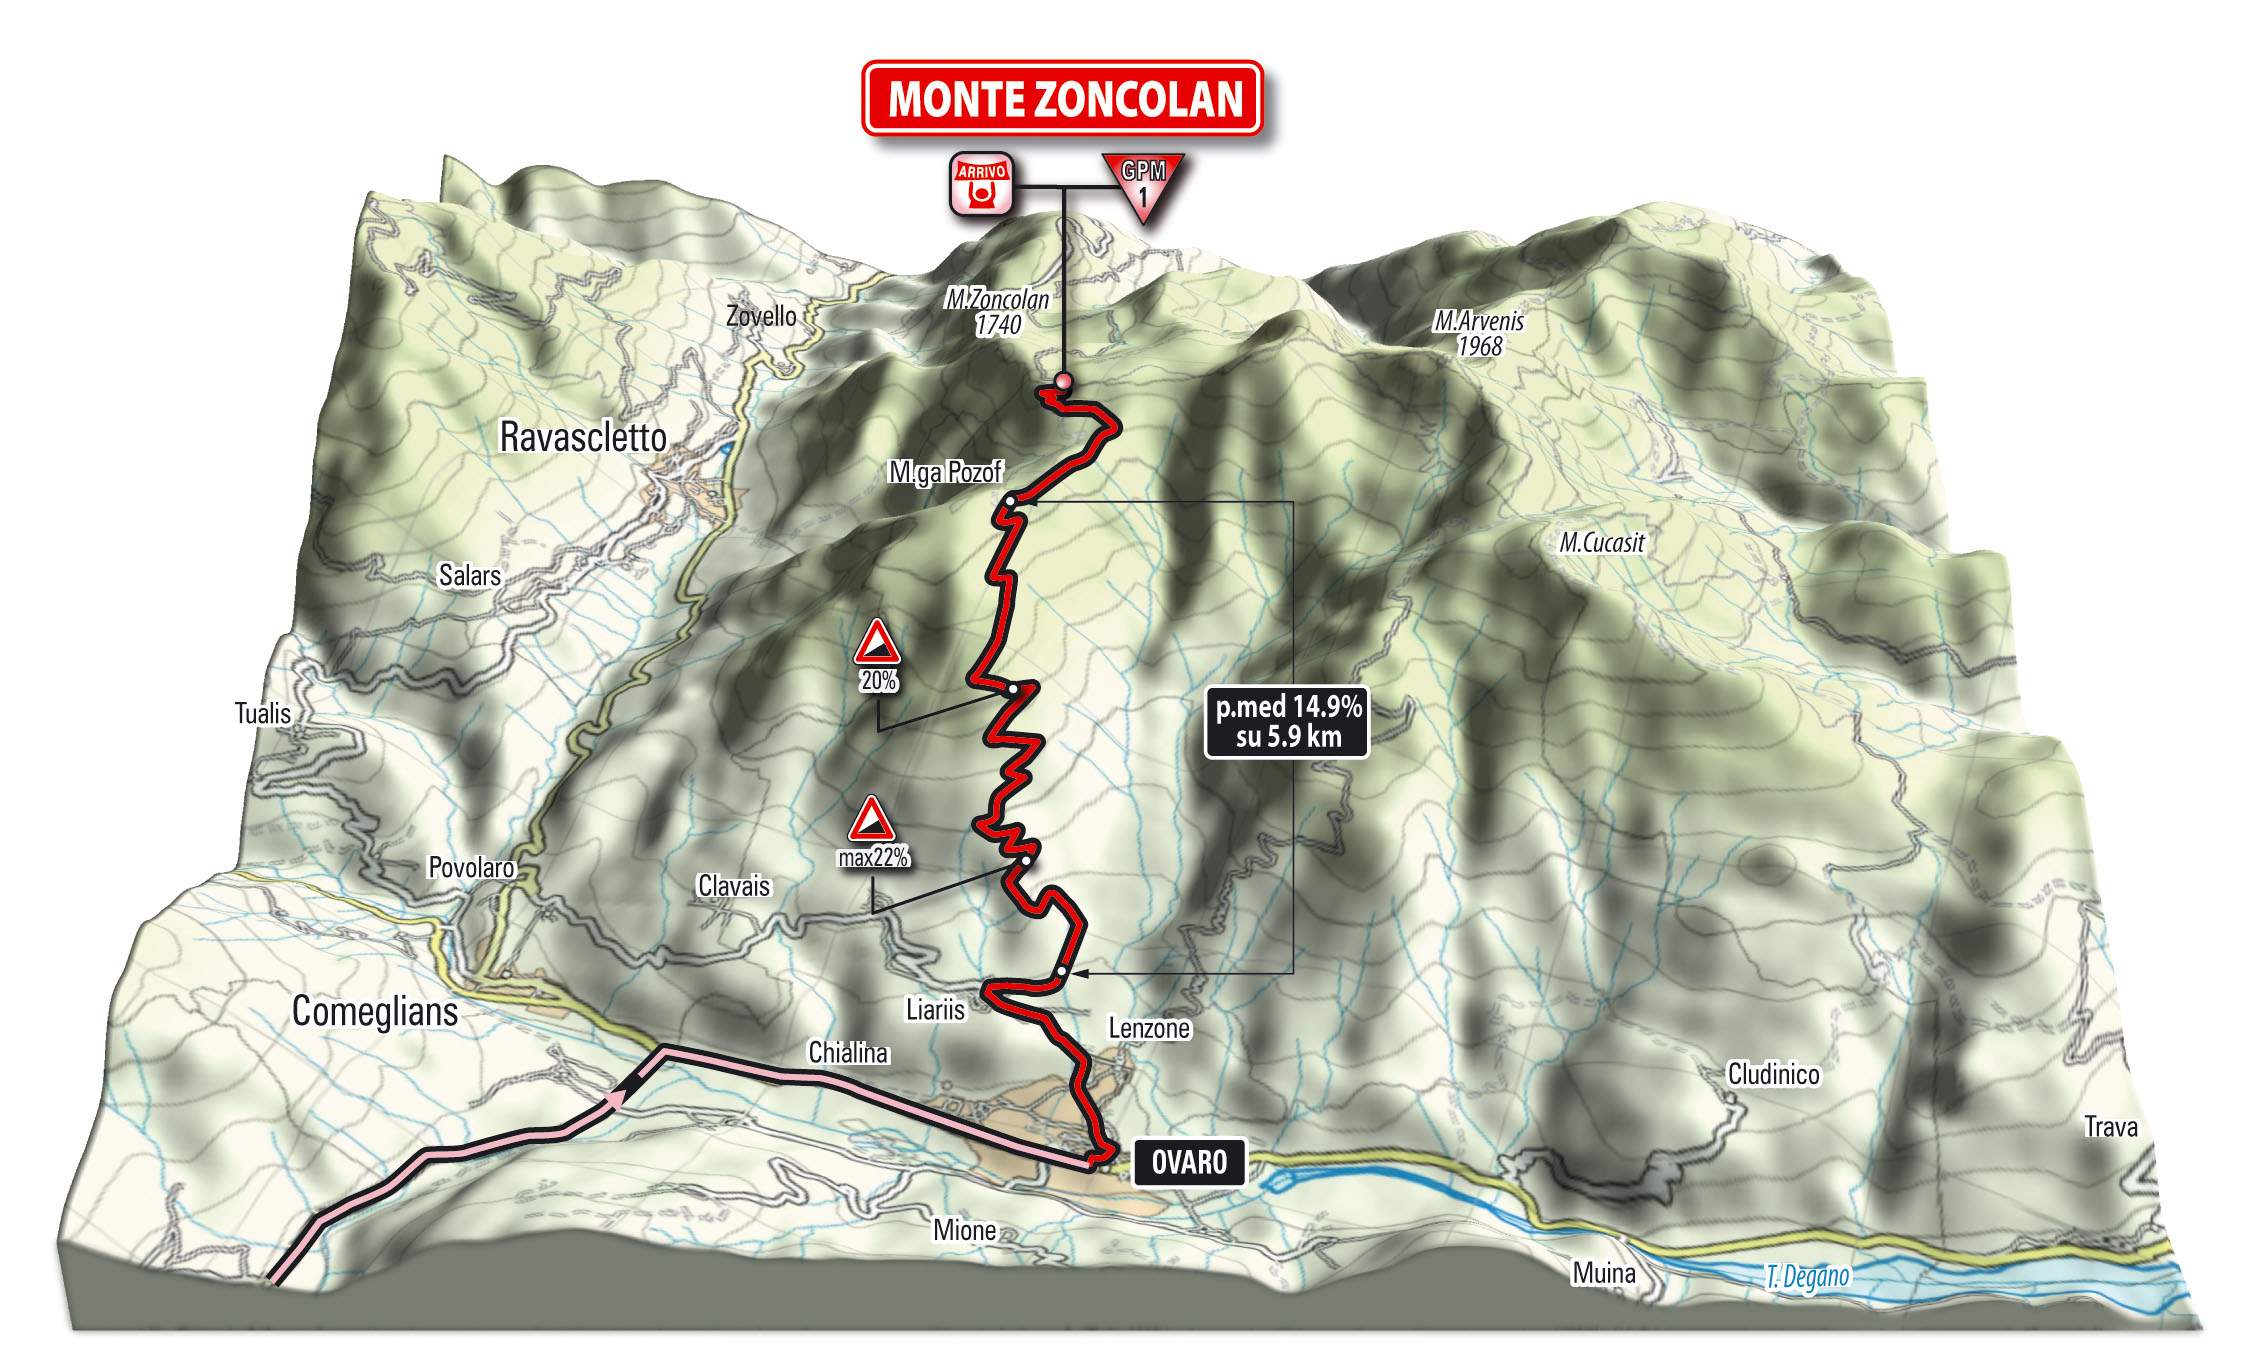 Giro d'Italia 2014 stage 20 climb details - Monte Zoncolan - 3D (new)